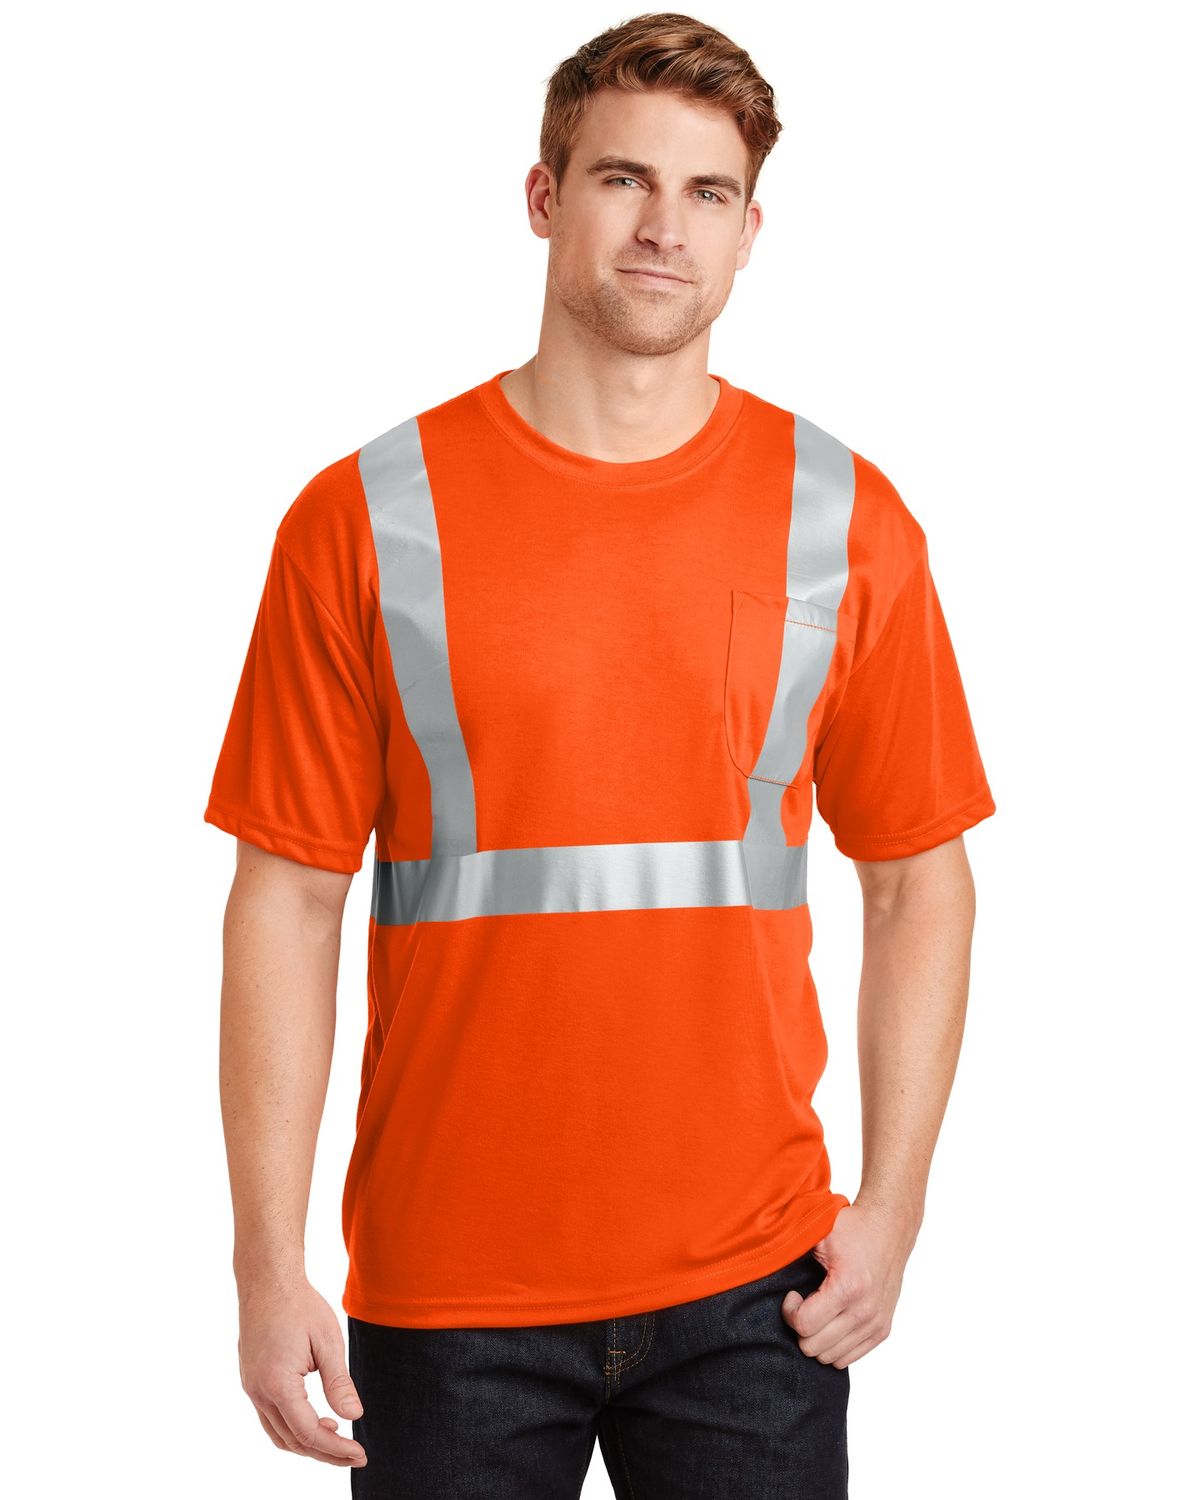 'Cornerstone CS401 ANSI Compliant Safety T-Shirt'